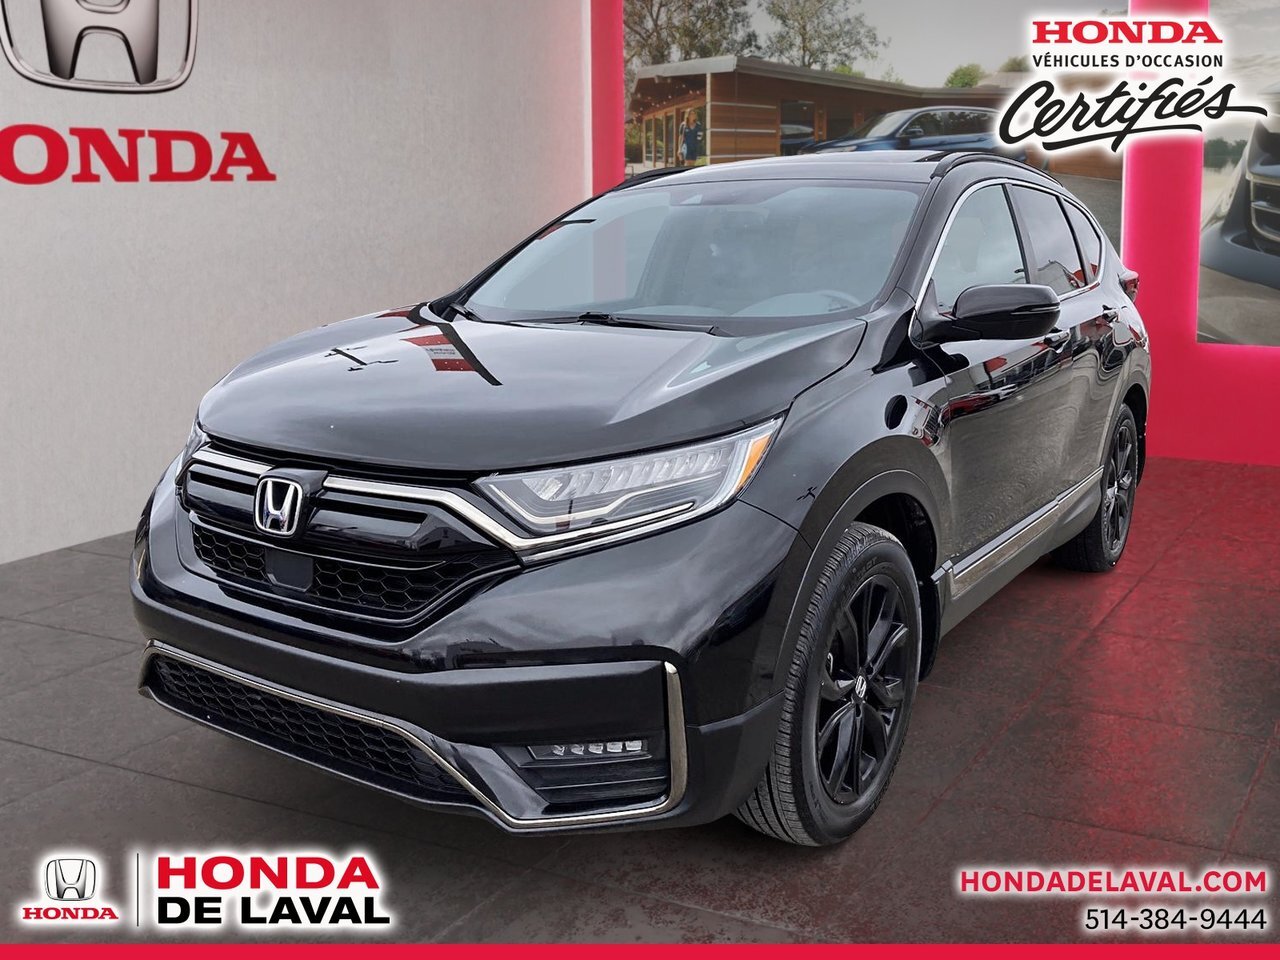 2020 Honda CR-V BLACK EDITION 25.120 KM  certifie honda